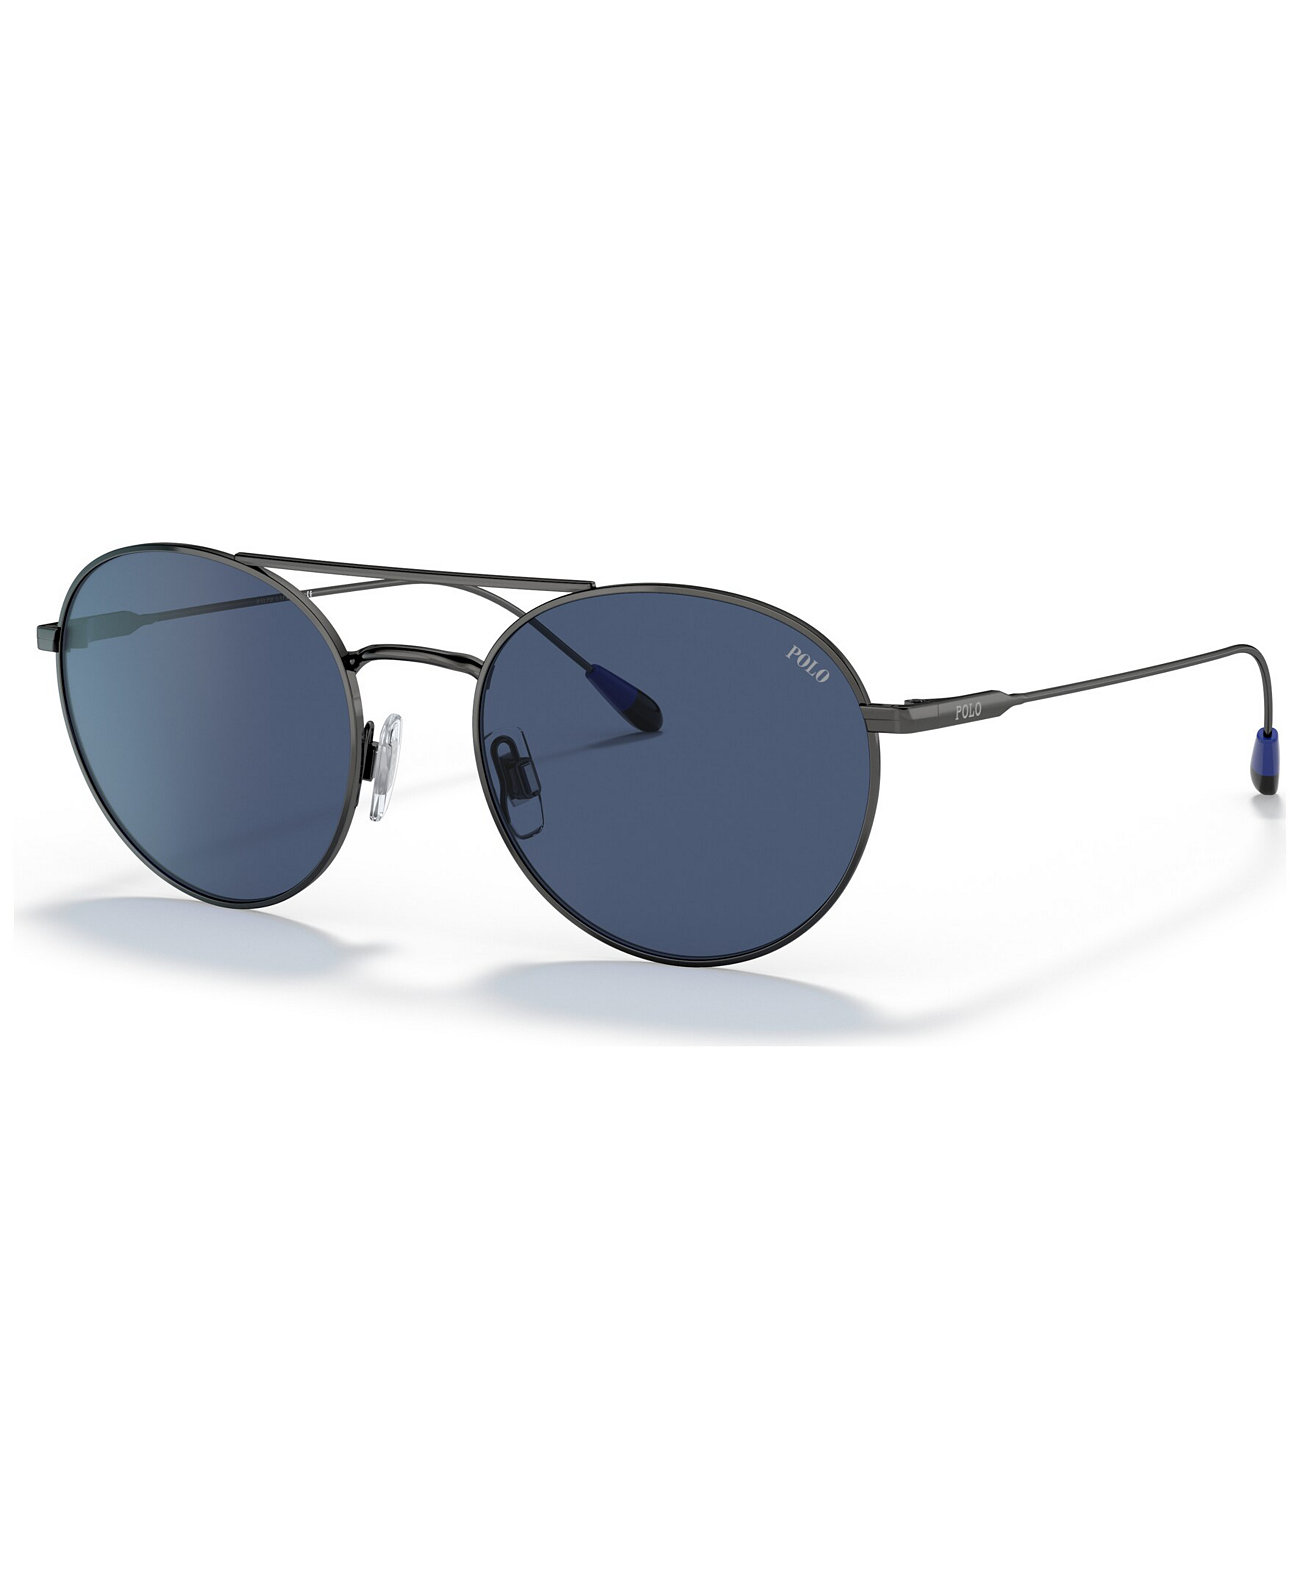 Men's Sunglasses, PH3136 Polo Ralph Lauren